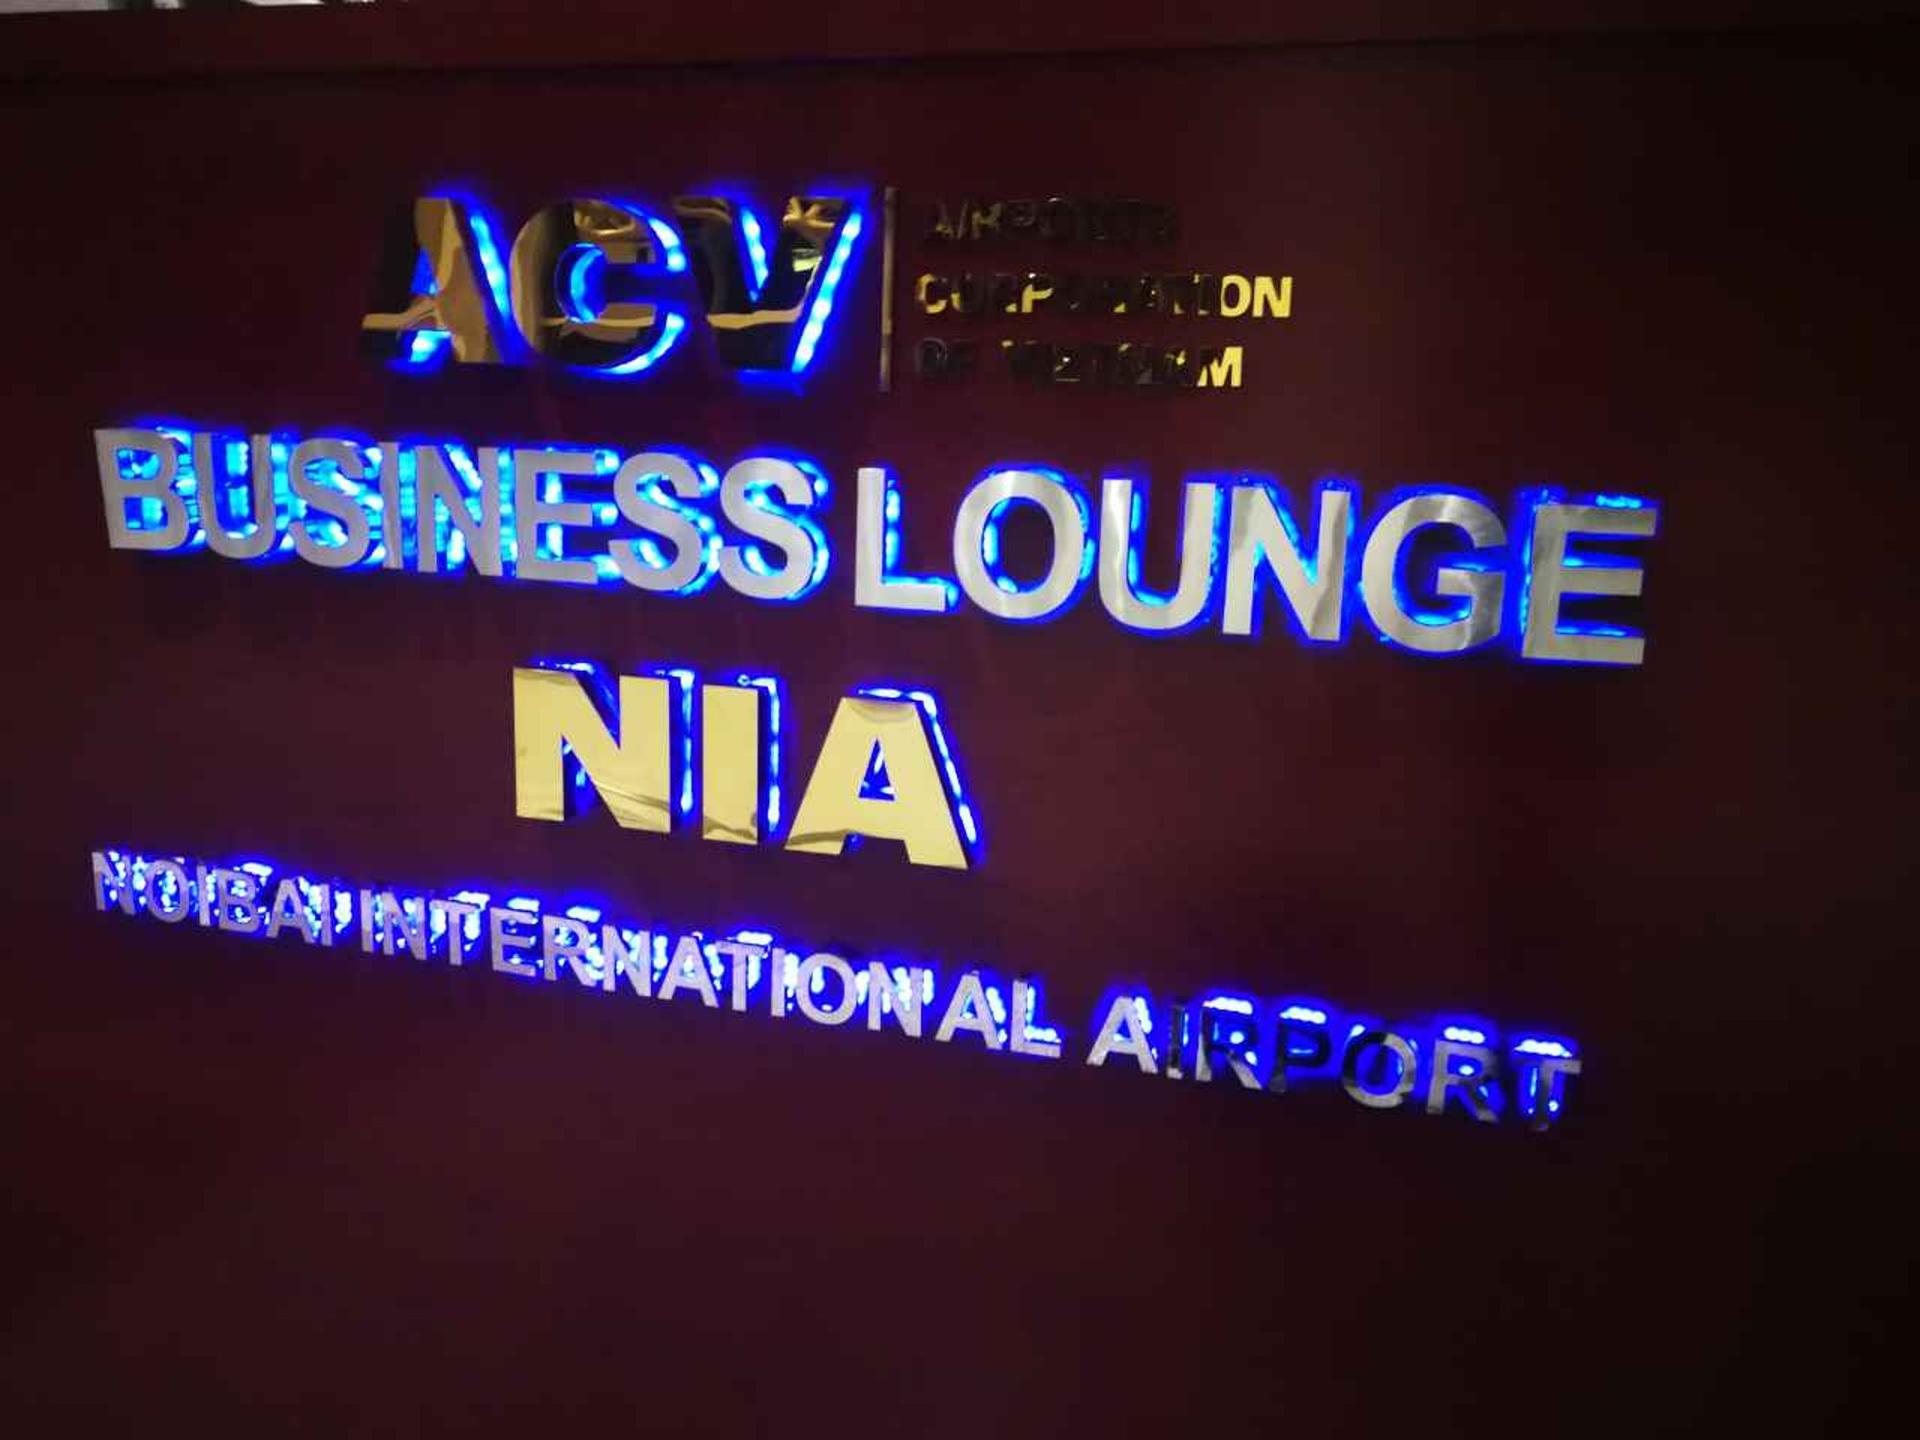 Noi Bai International Airport Business Lounge image 10 of 26